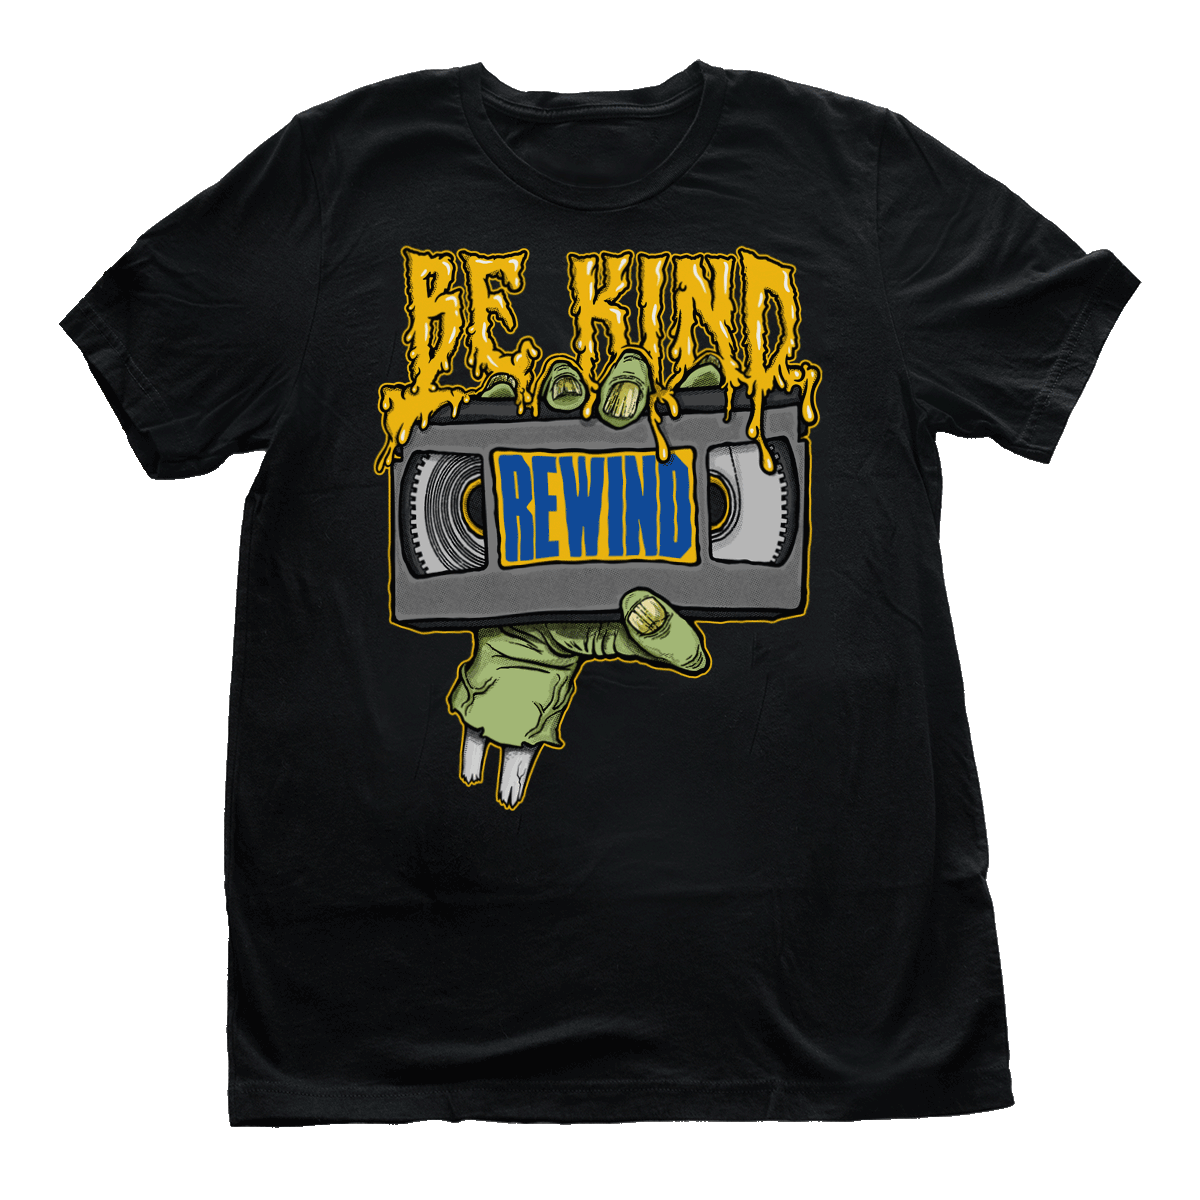 Be Kind, Rewind T-Shirt